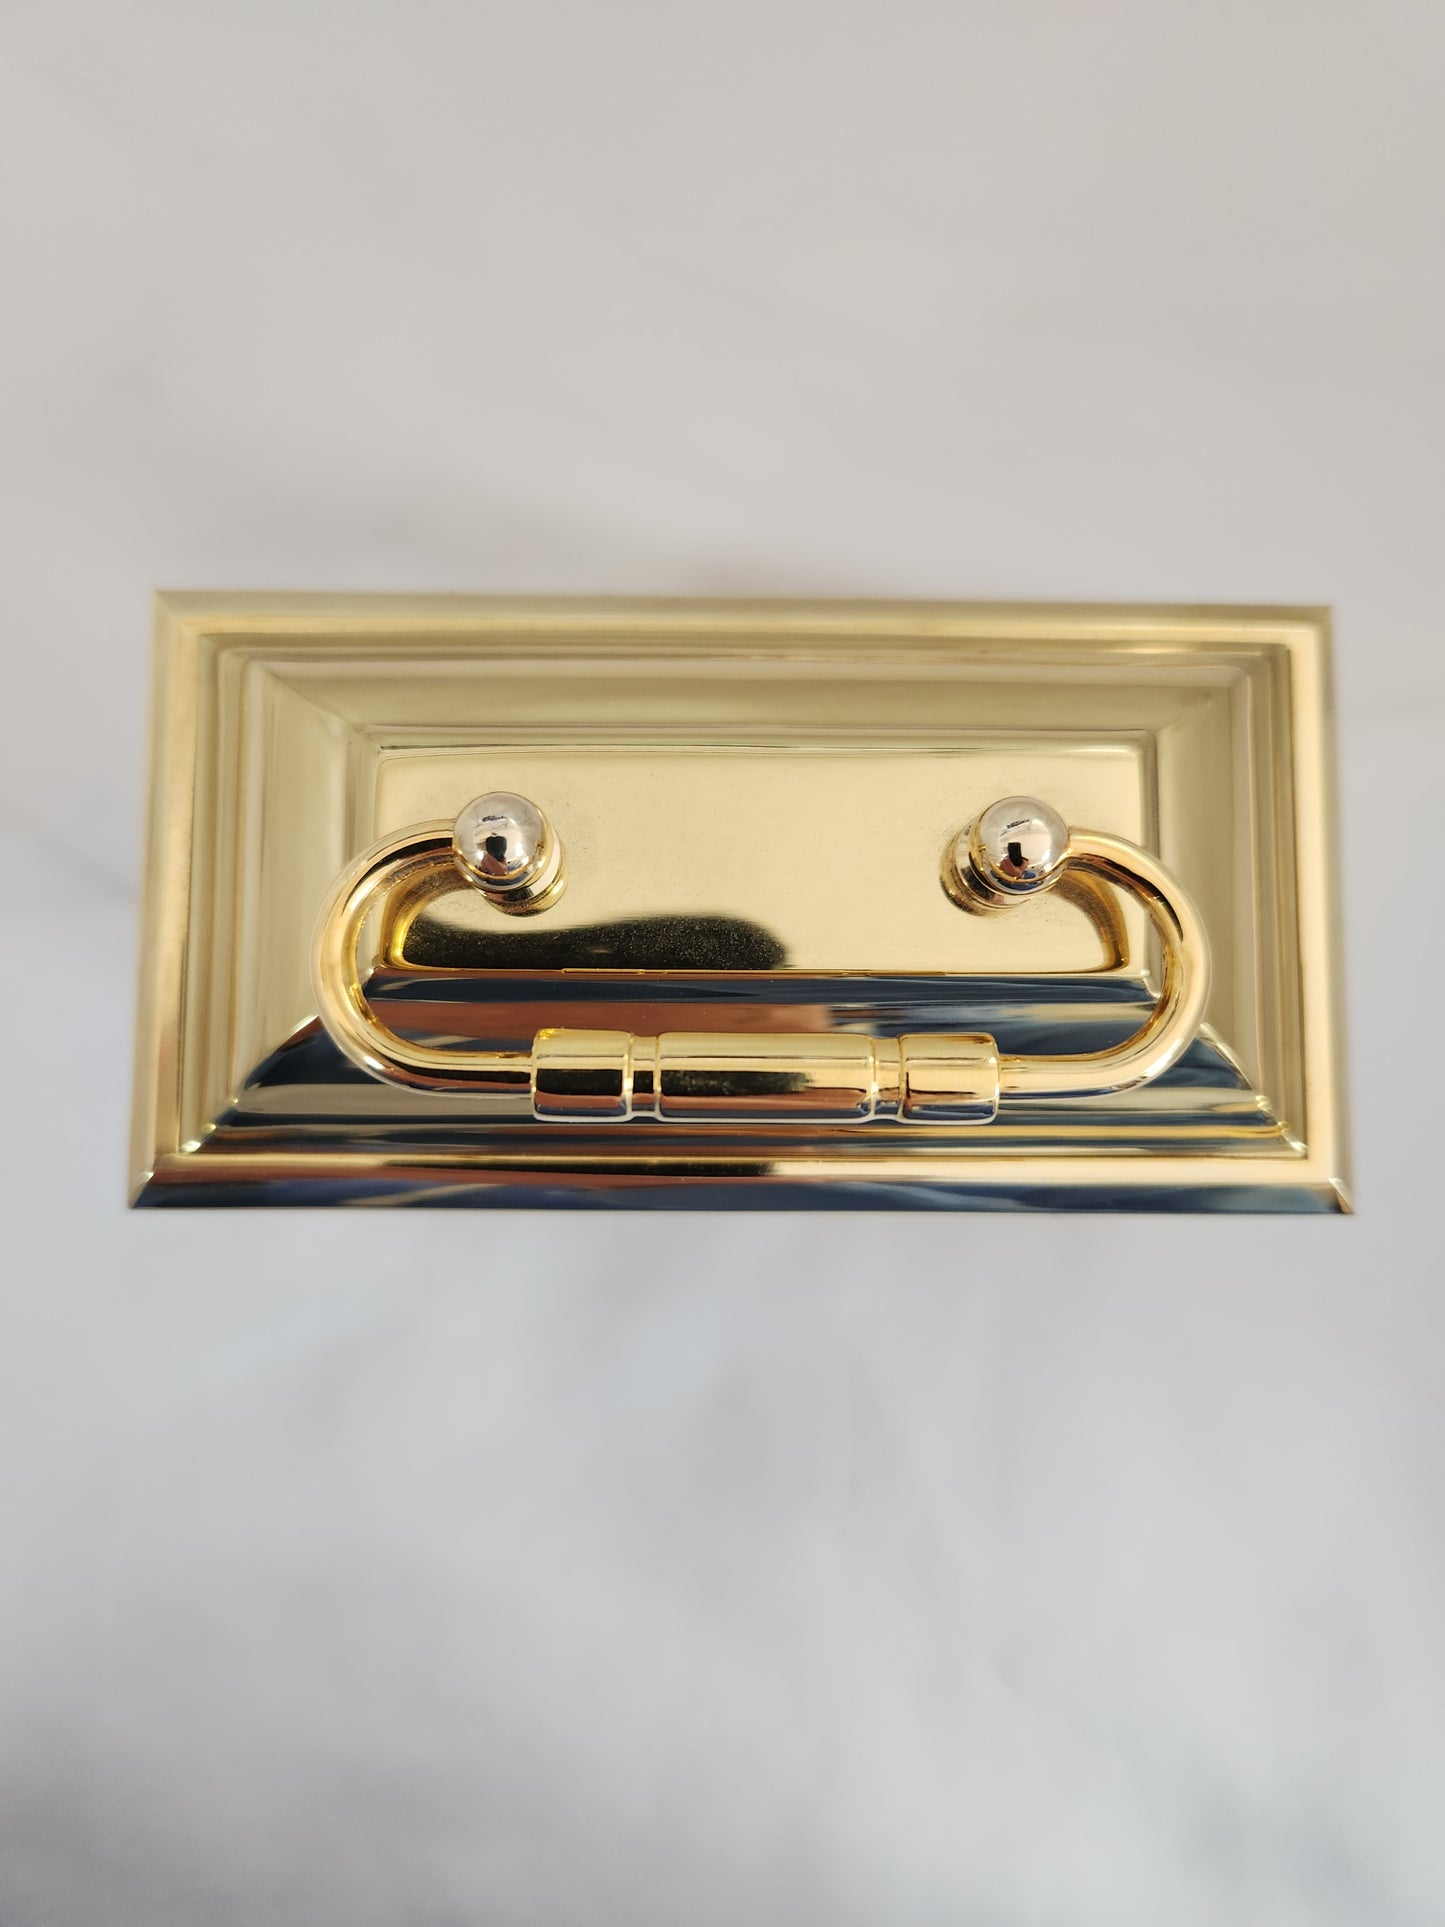 Howard Miller Brass Dual Chime Clock 645-229 W/ Westminster & Whittington Chimes